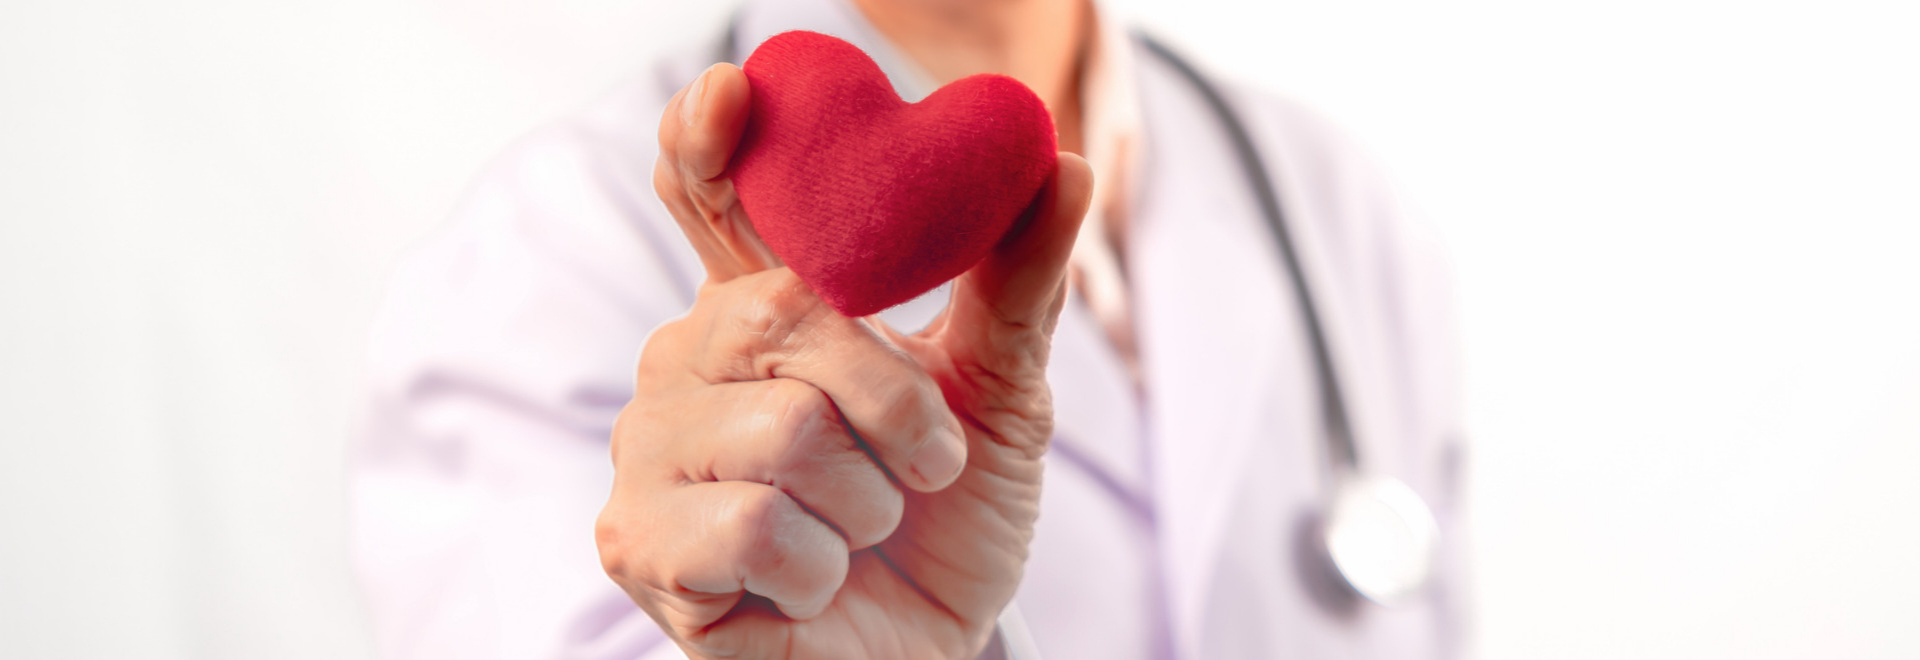 heart-disease-causes-symptoms-treatment-prevention